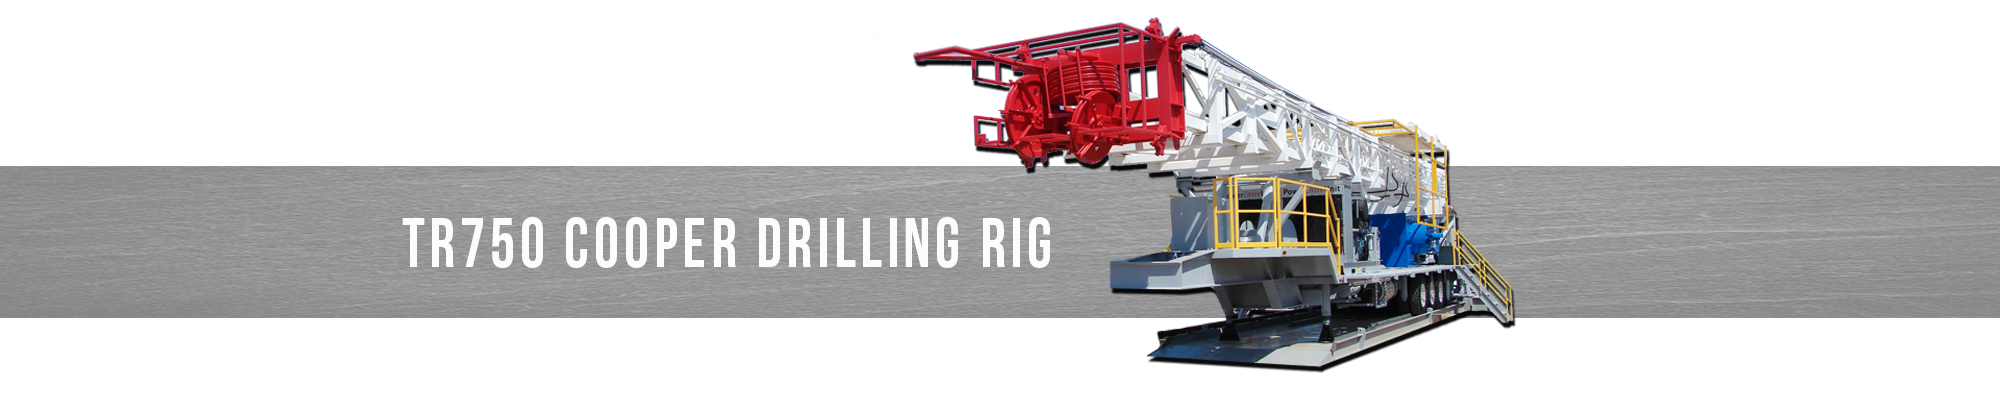 TR750 Cooper Drilling Rig